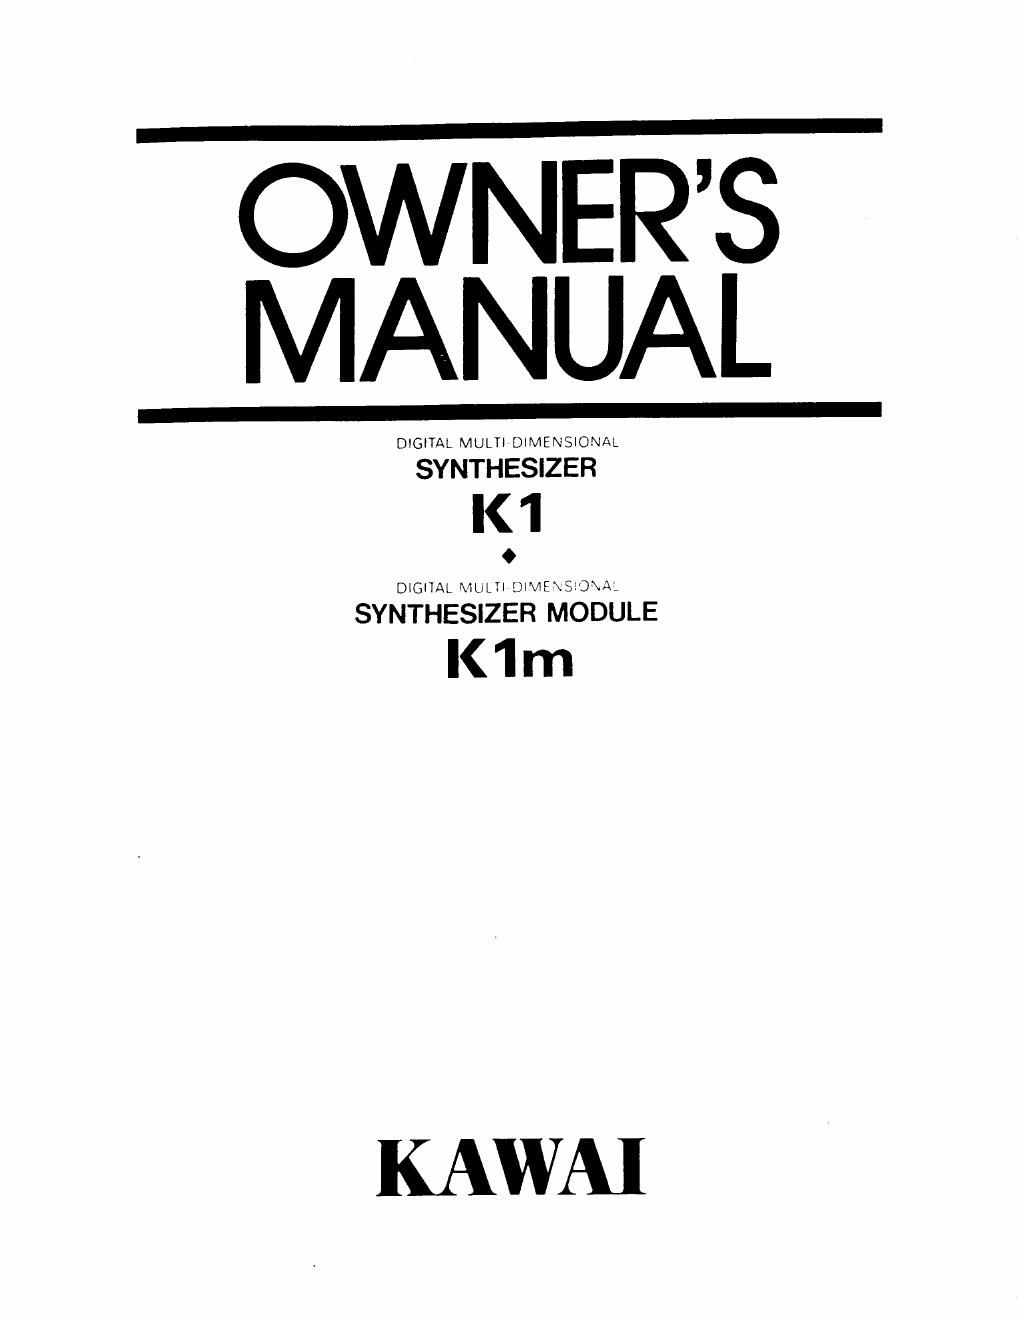 kawai k1 m owners manual